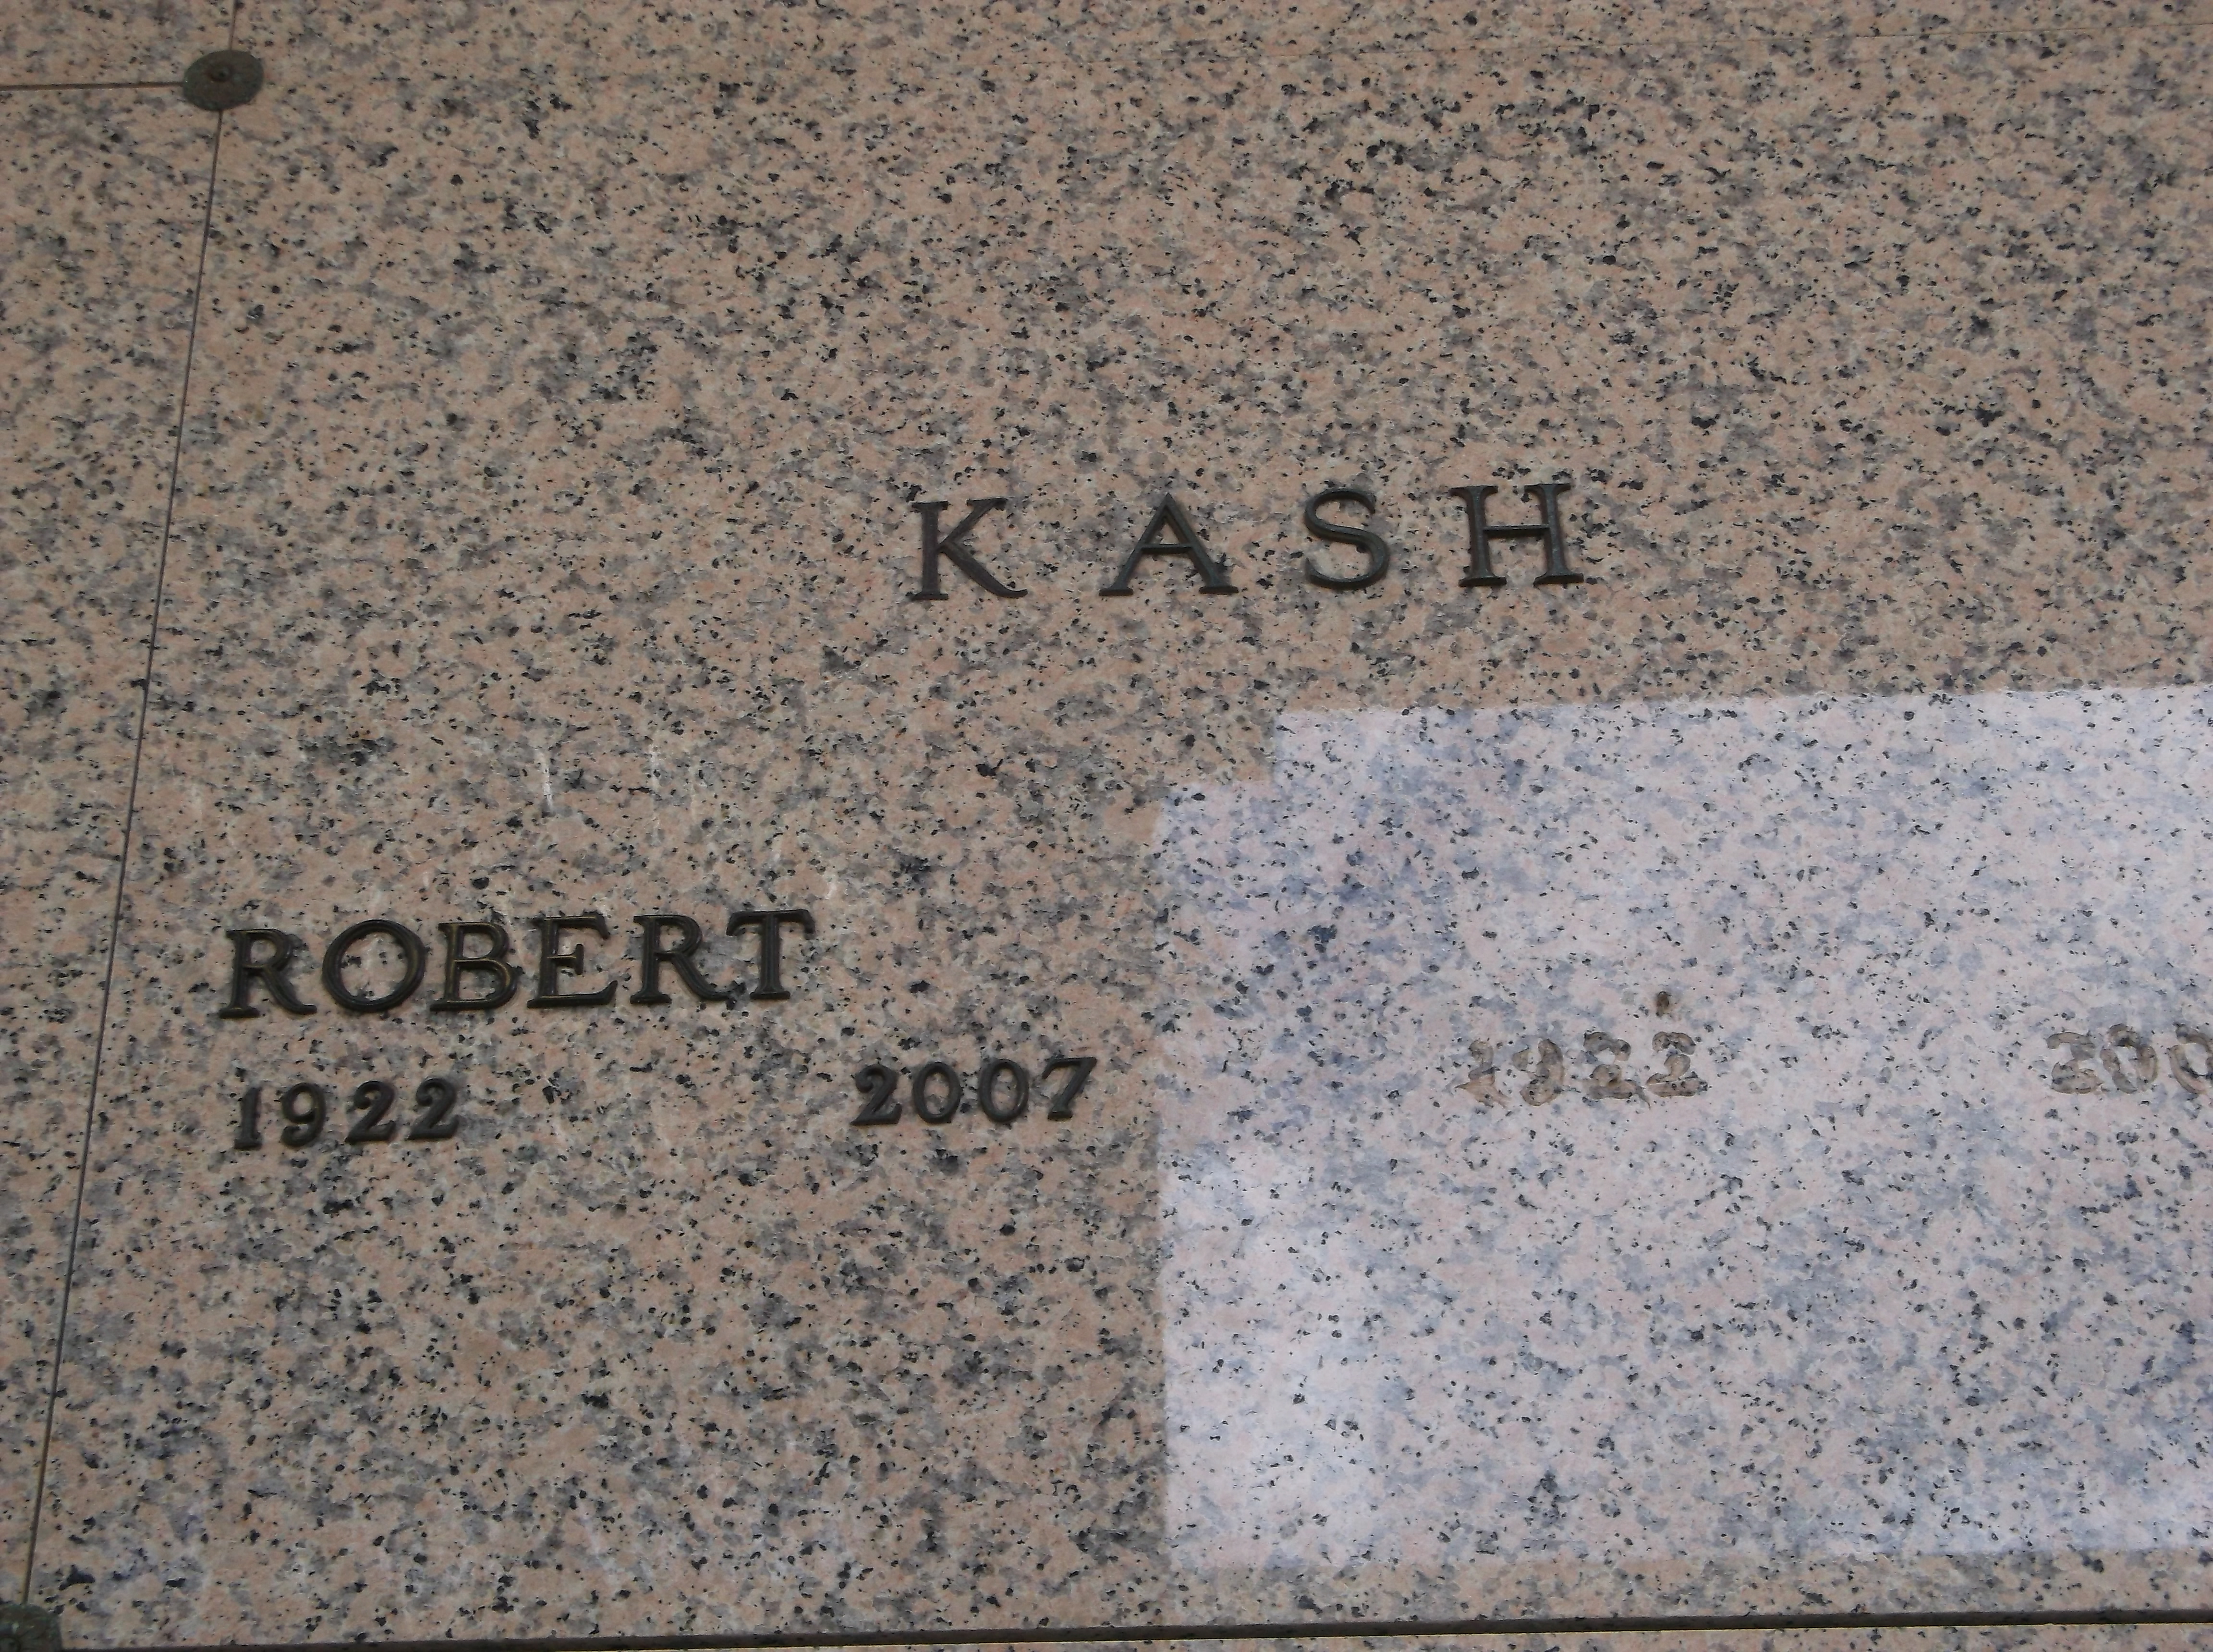 Robert Kash